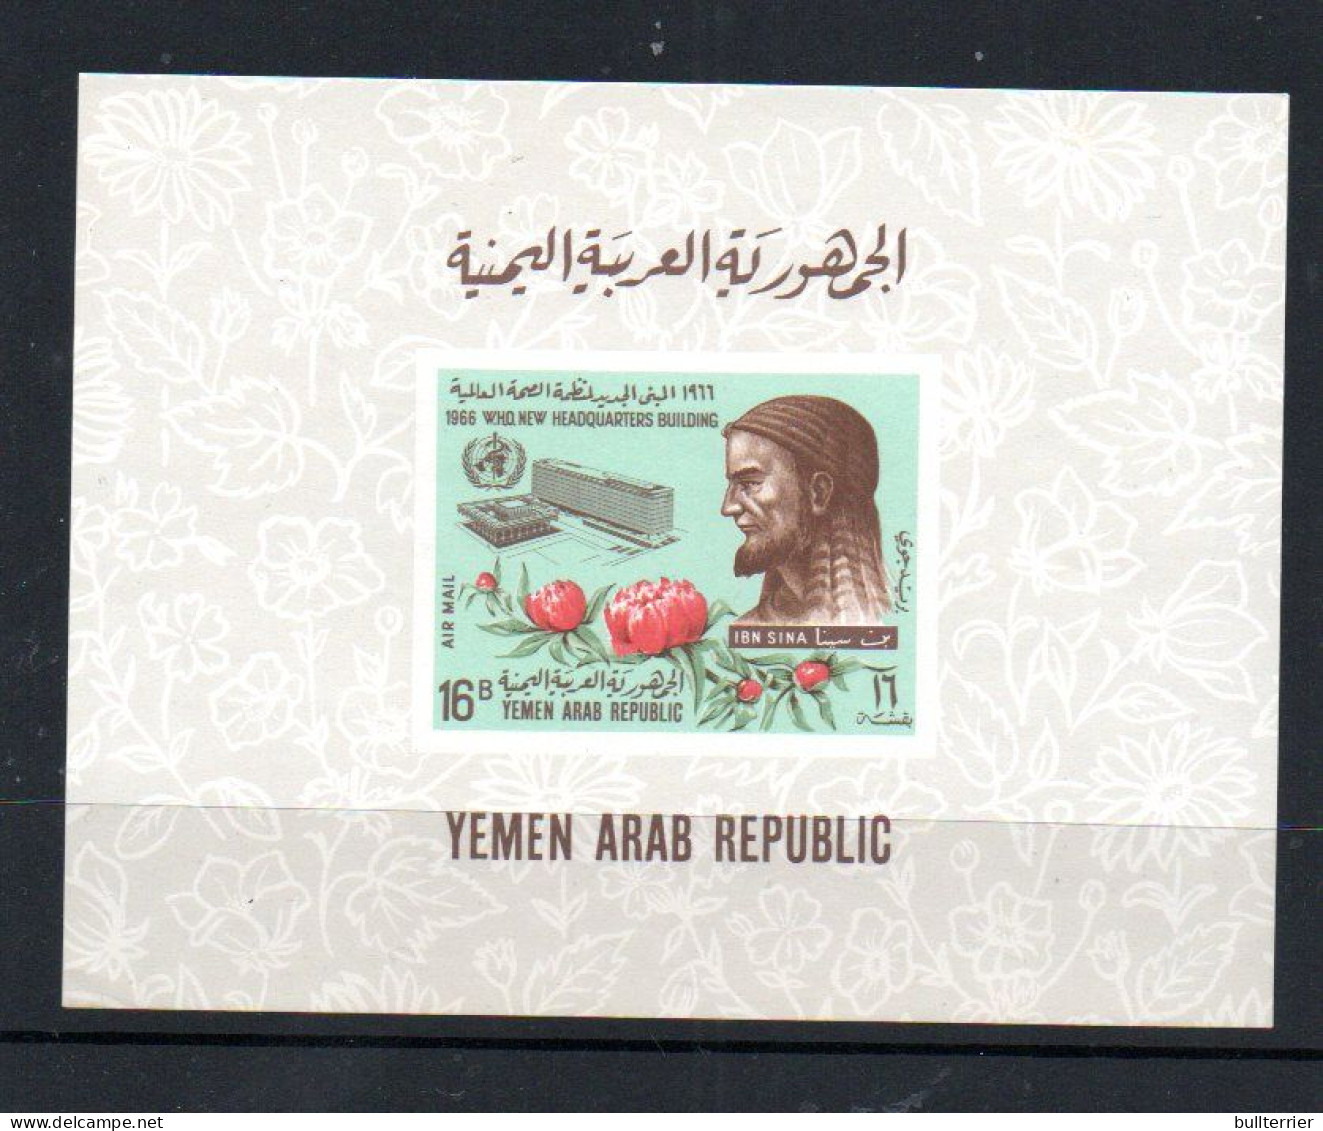 MEDICINE - YEMEN ARAB REPUBLIC - 1966 - WHO / IBN  SINA SOUVENIR SHEET  MINT NEVER HINGED SG £17 - Medicine